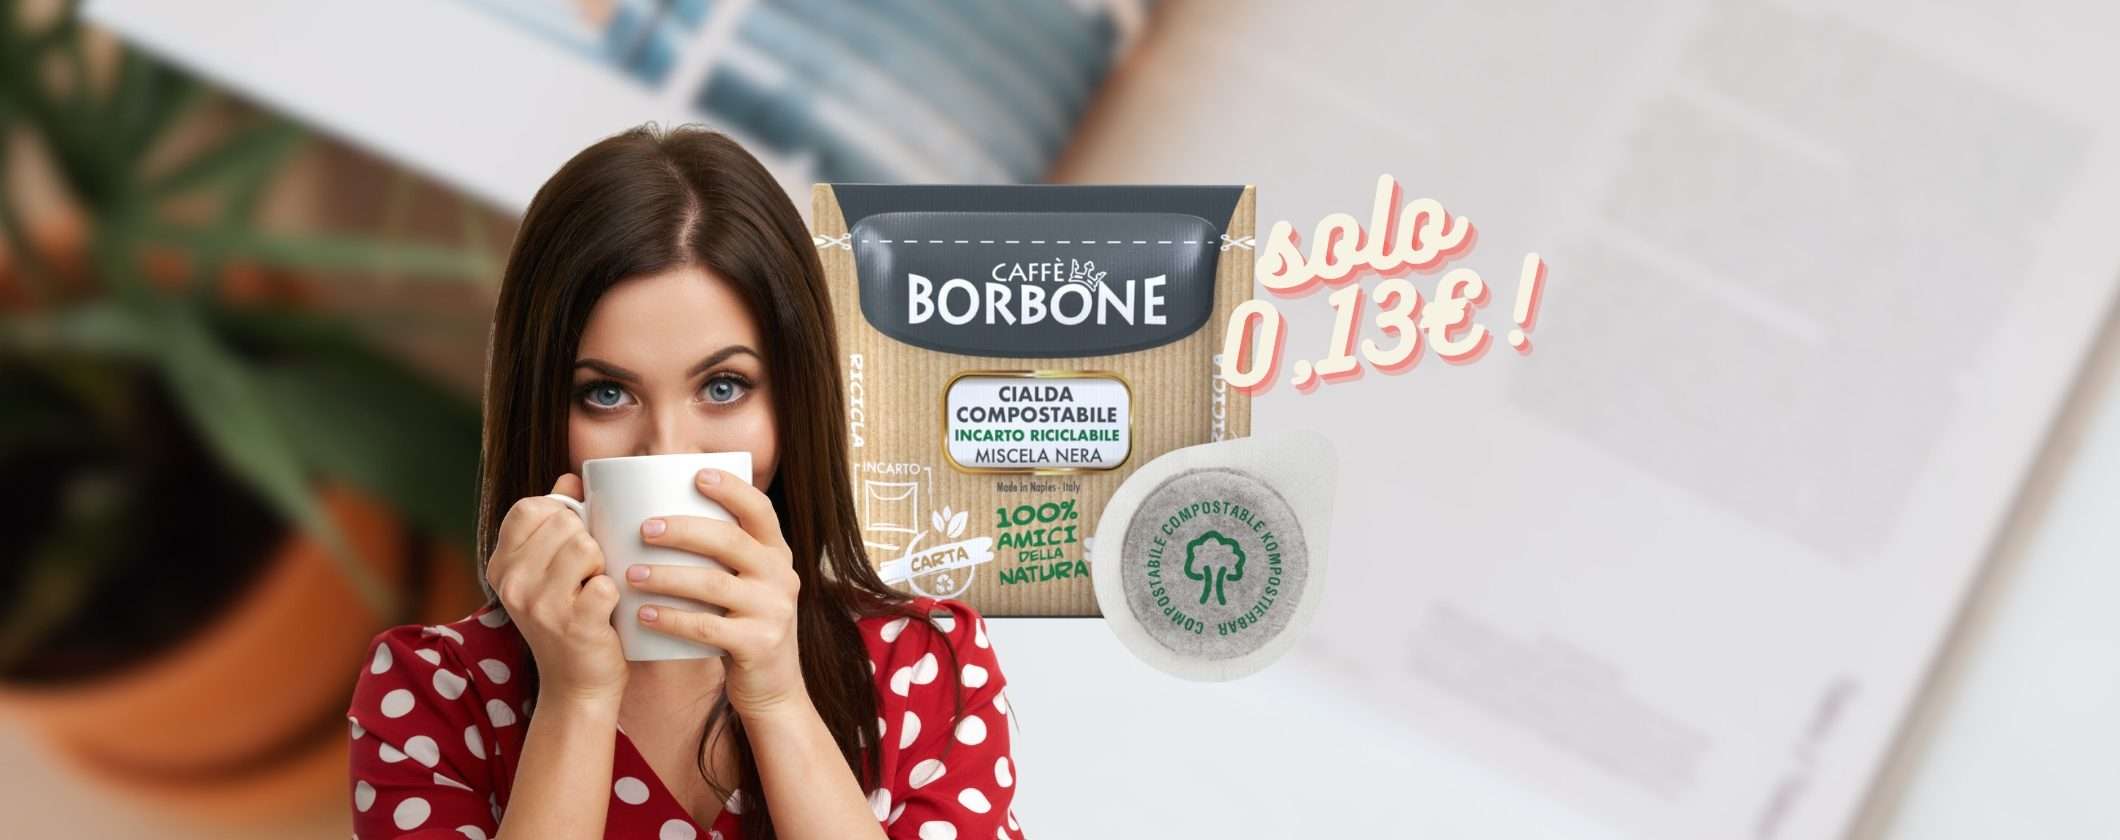 Cialde Caffè Borbone: solo 0,13€ grazie all'OFFERTA di eBay